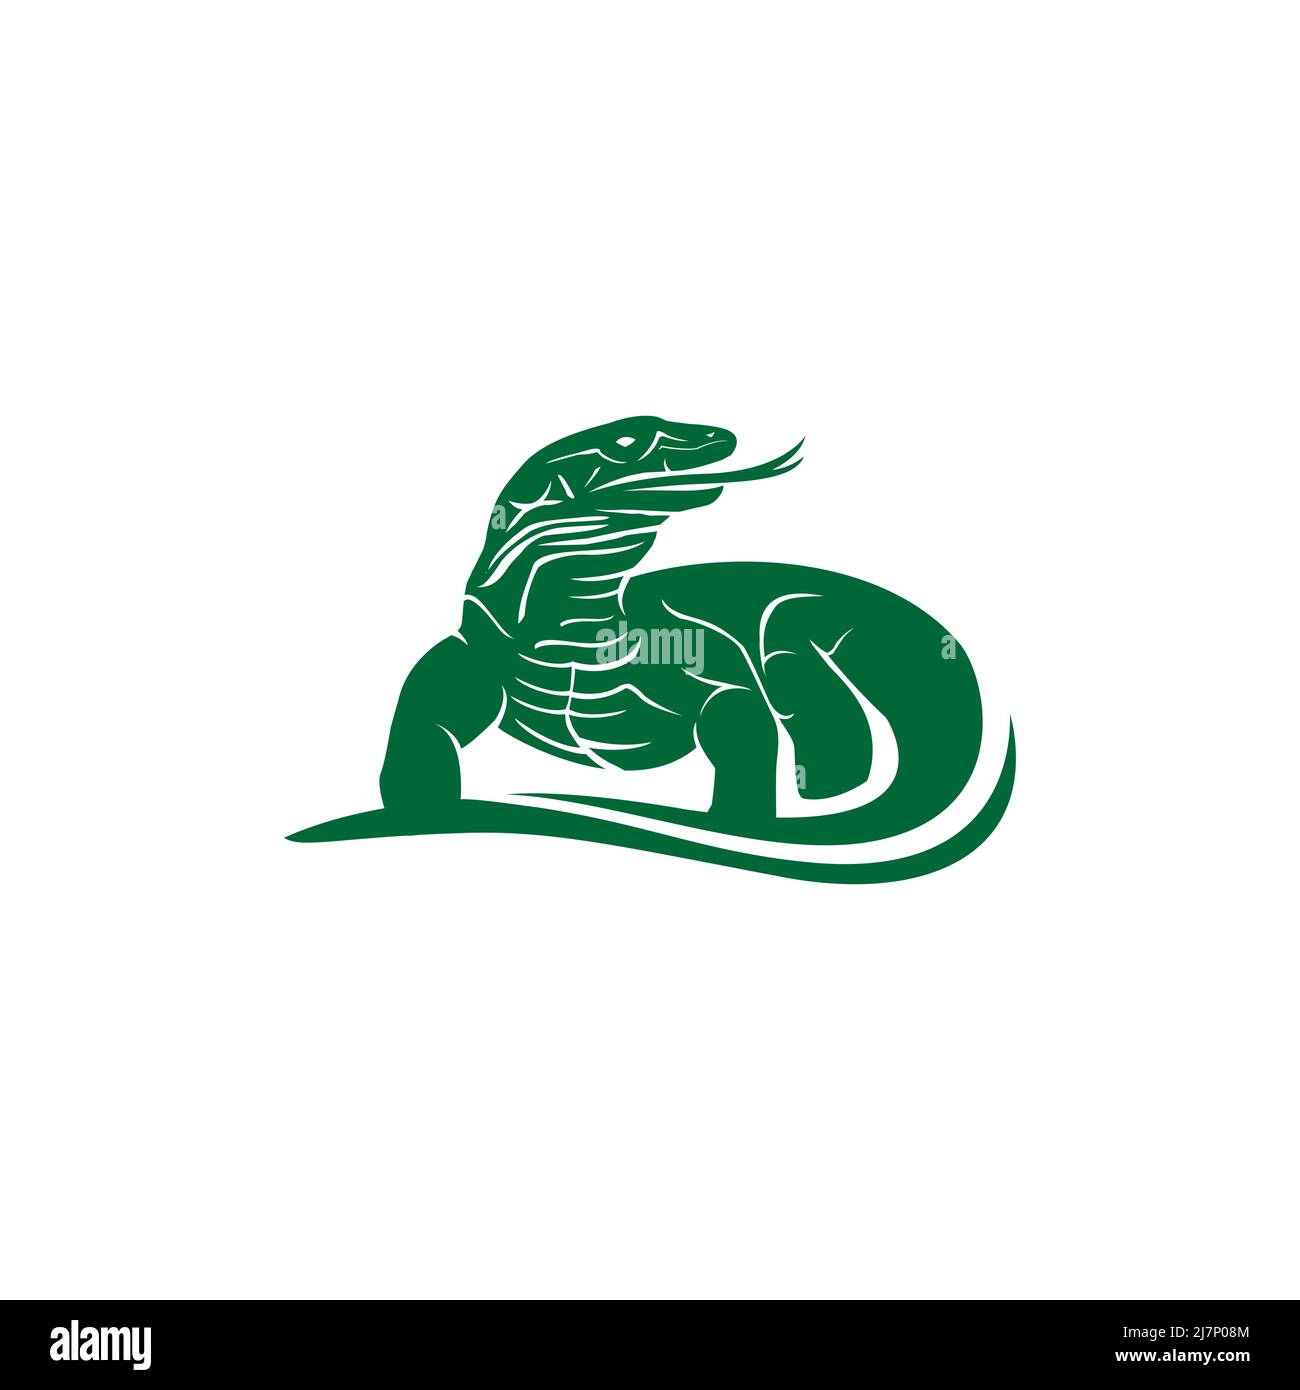 Komodo dragon logo design template. Graphic animal illustration Stock Photo